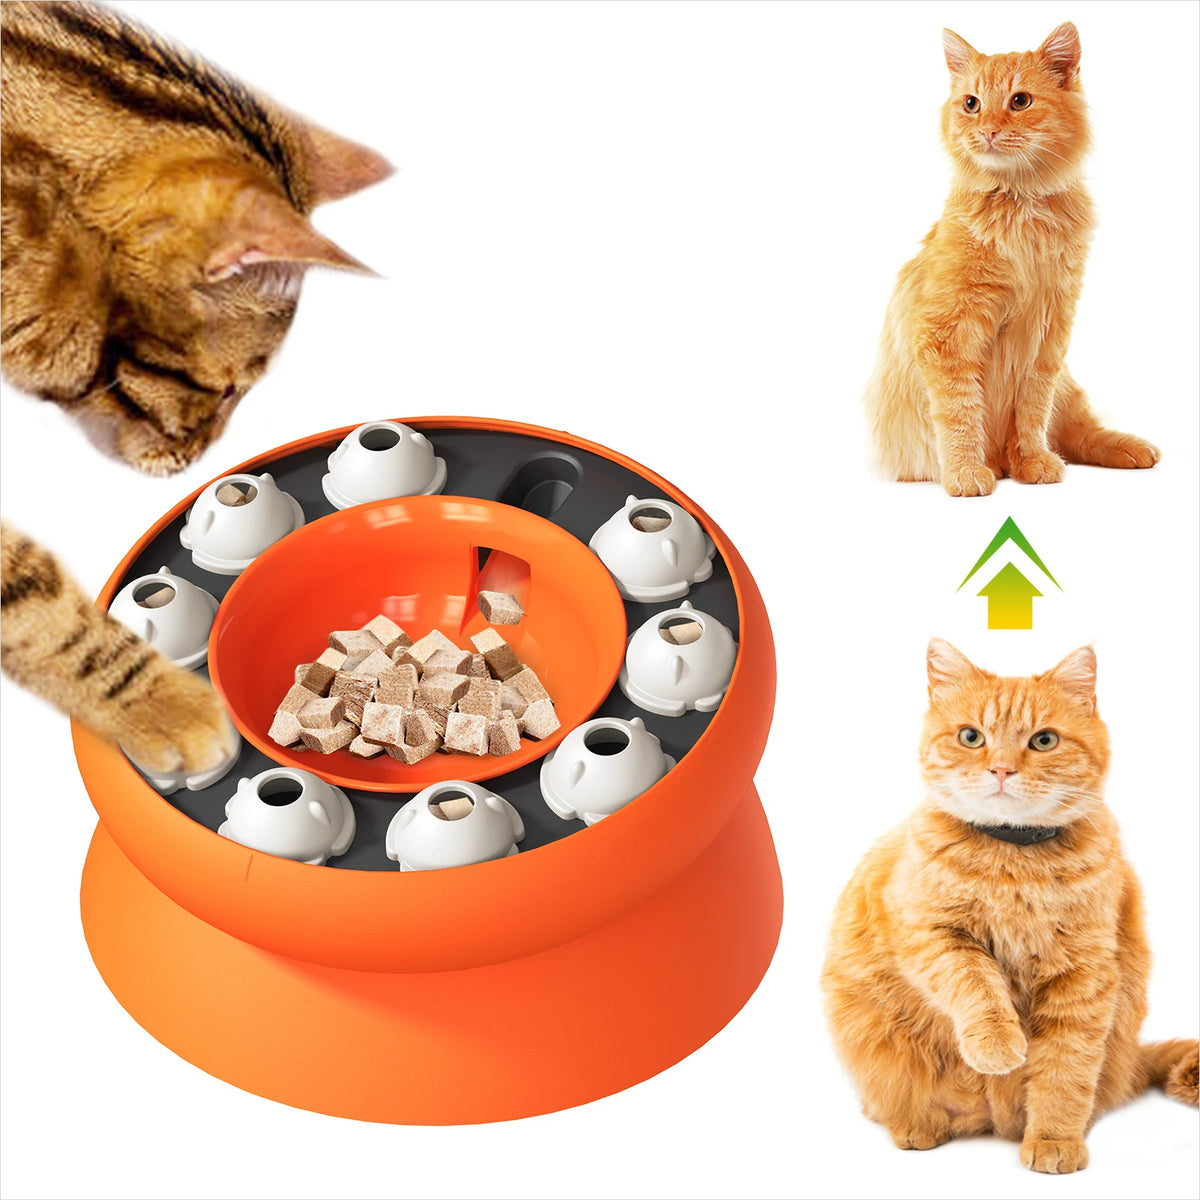 Feed'n'Play Cat Bowl